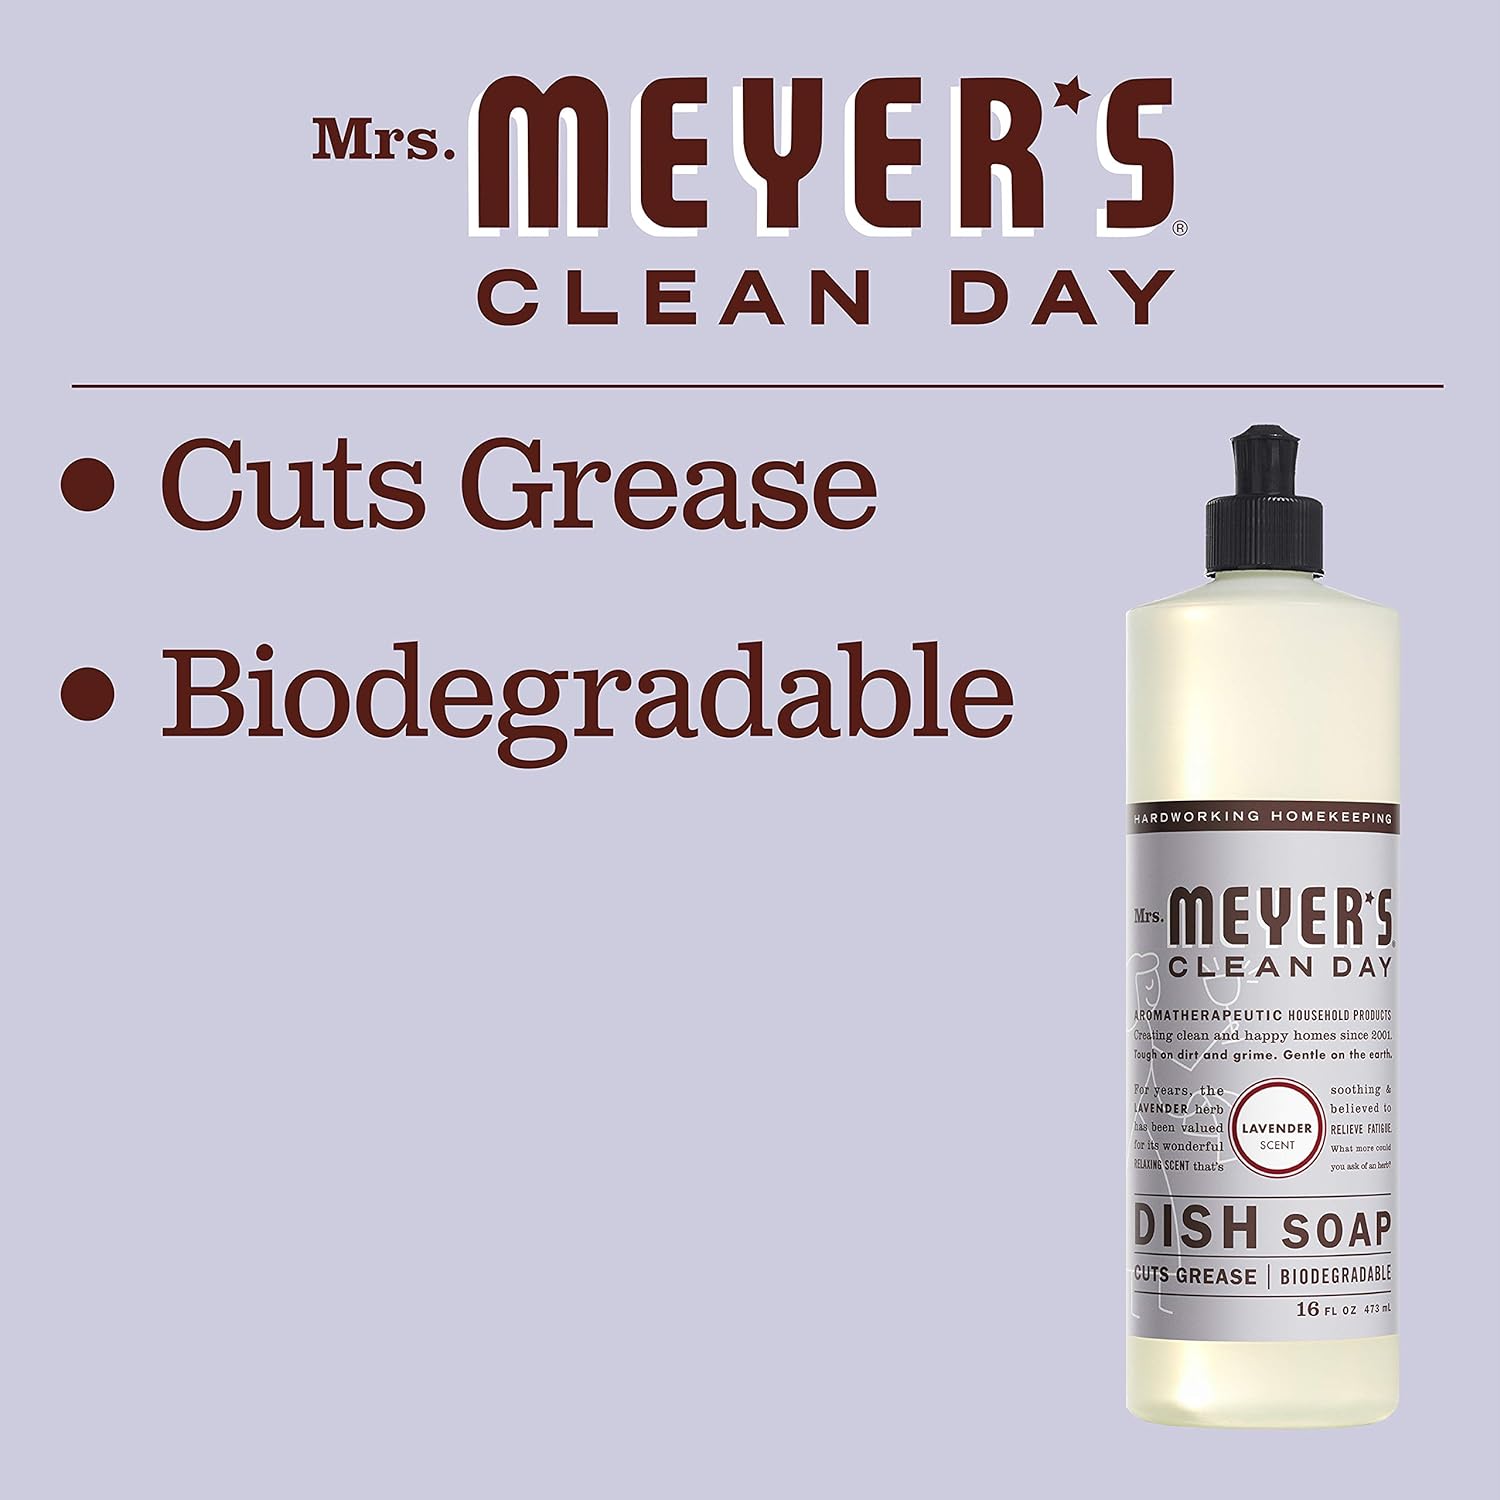 MRS. MEYER'S CLEAN DAY Liquid Dish Soap, Biodegradable Formula, Lavender, 16 fl. oz - Pack of 3 : Health & Household